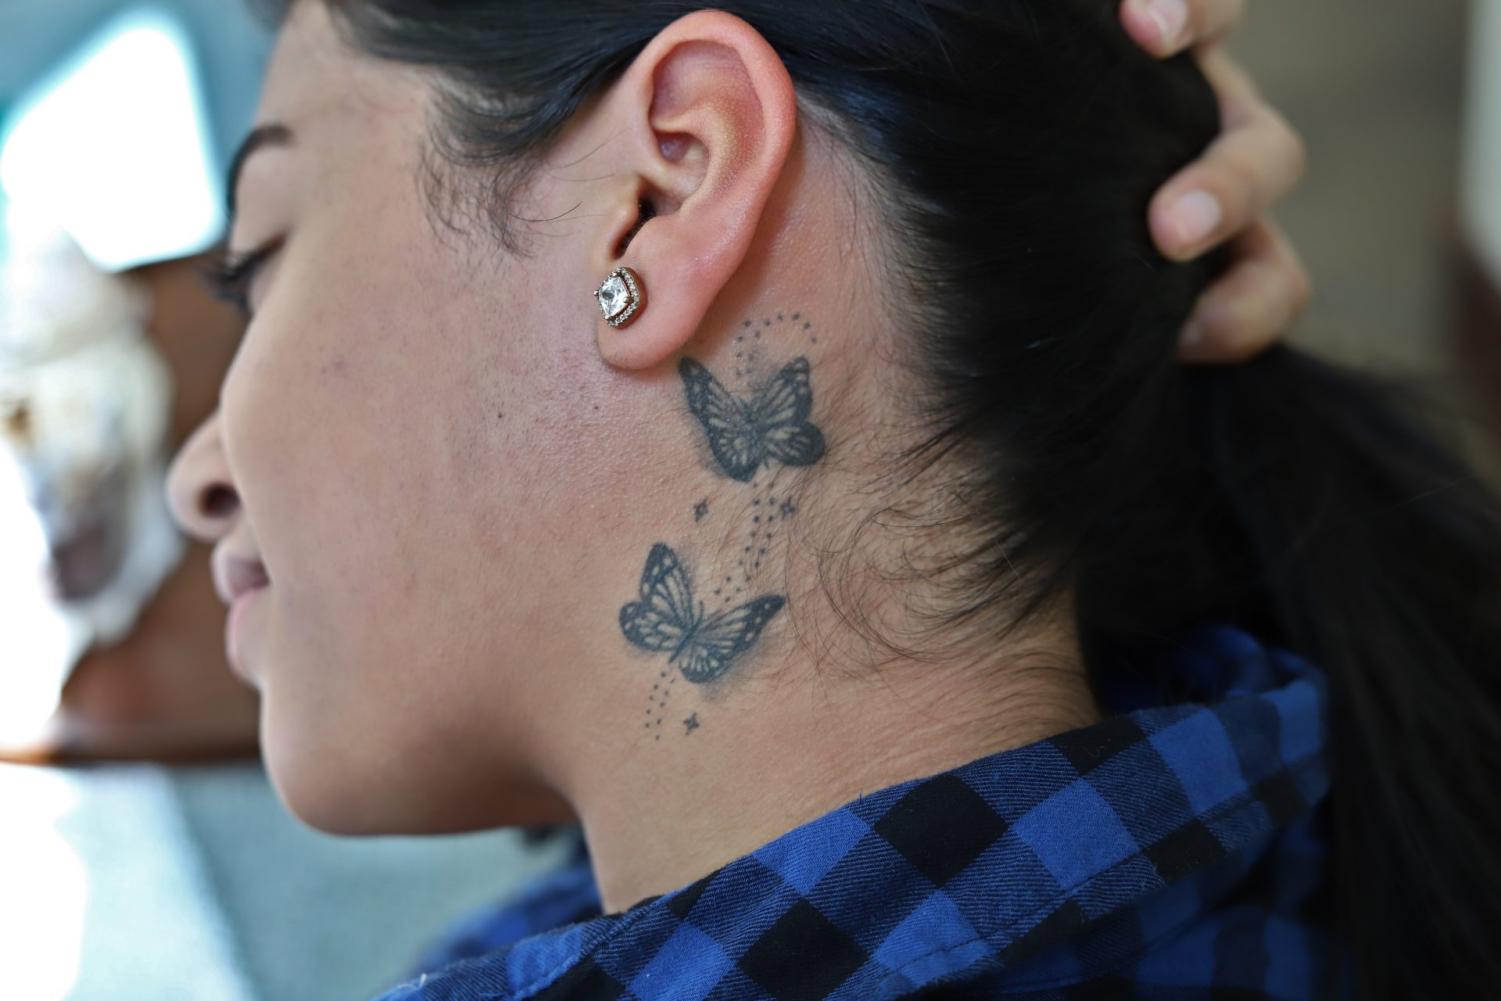 Man's Hickey Tattoo Leaves Social Media Users Amused